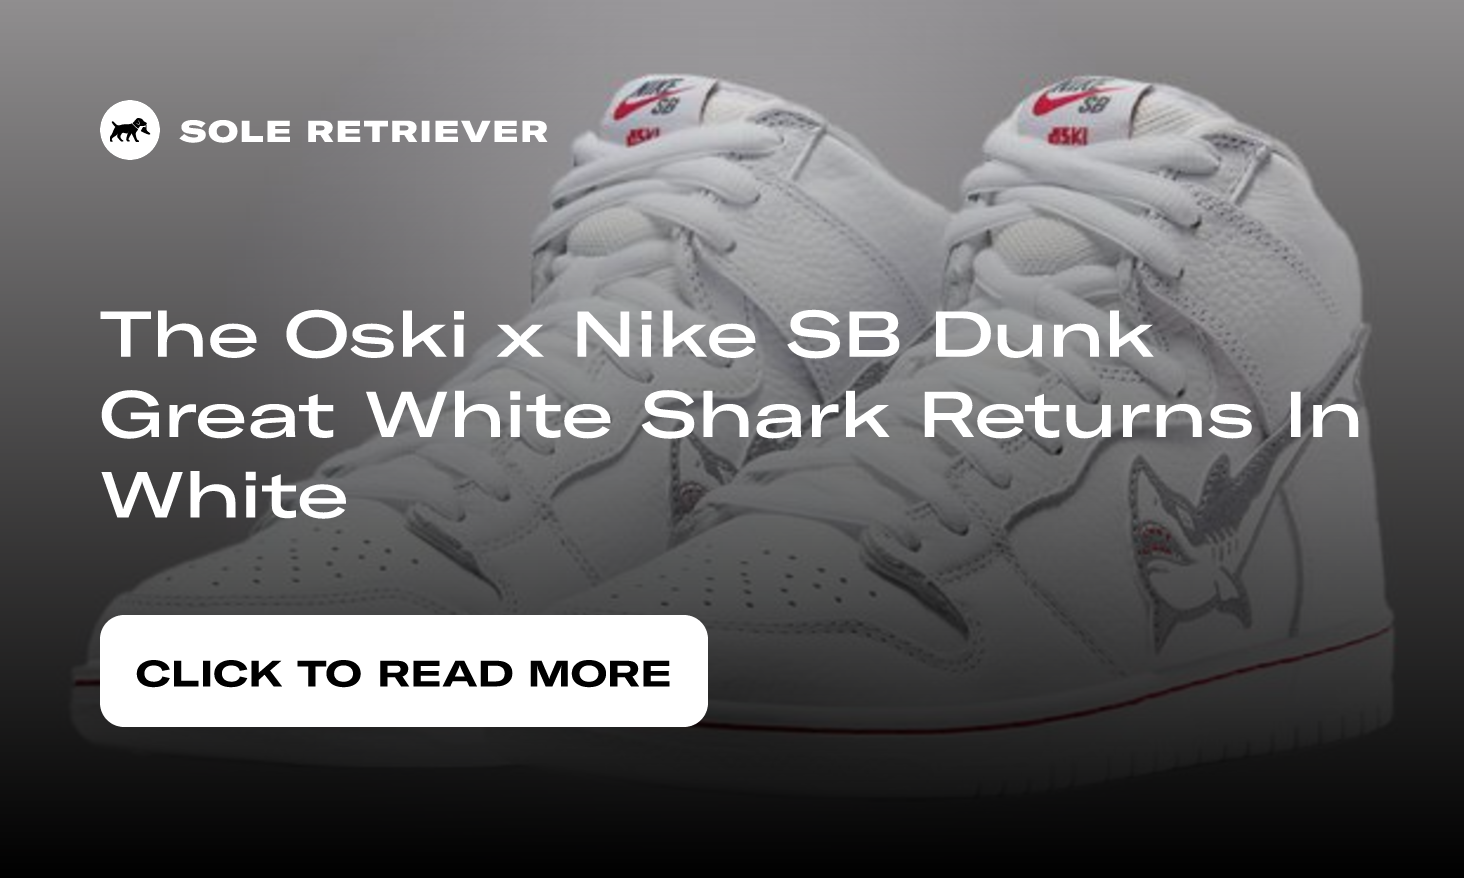 The Oski x Nike SB Dunk Great White Shark Returns In White